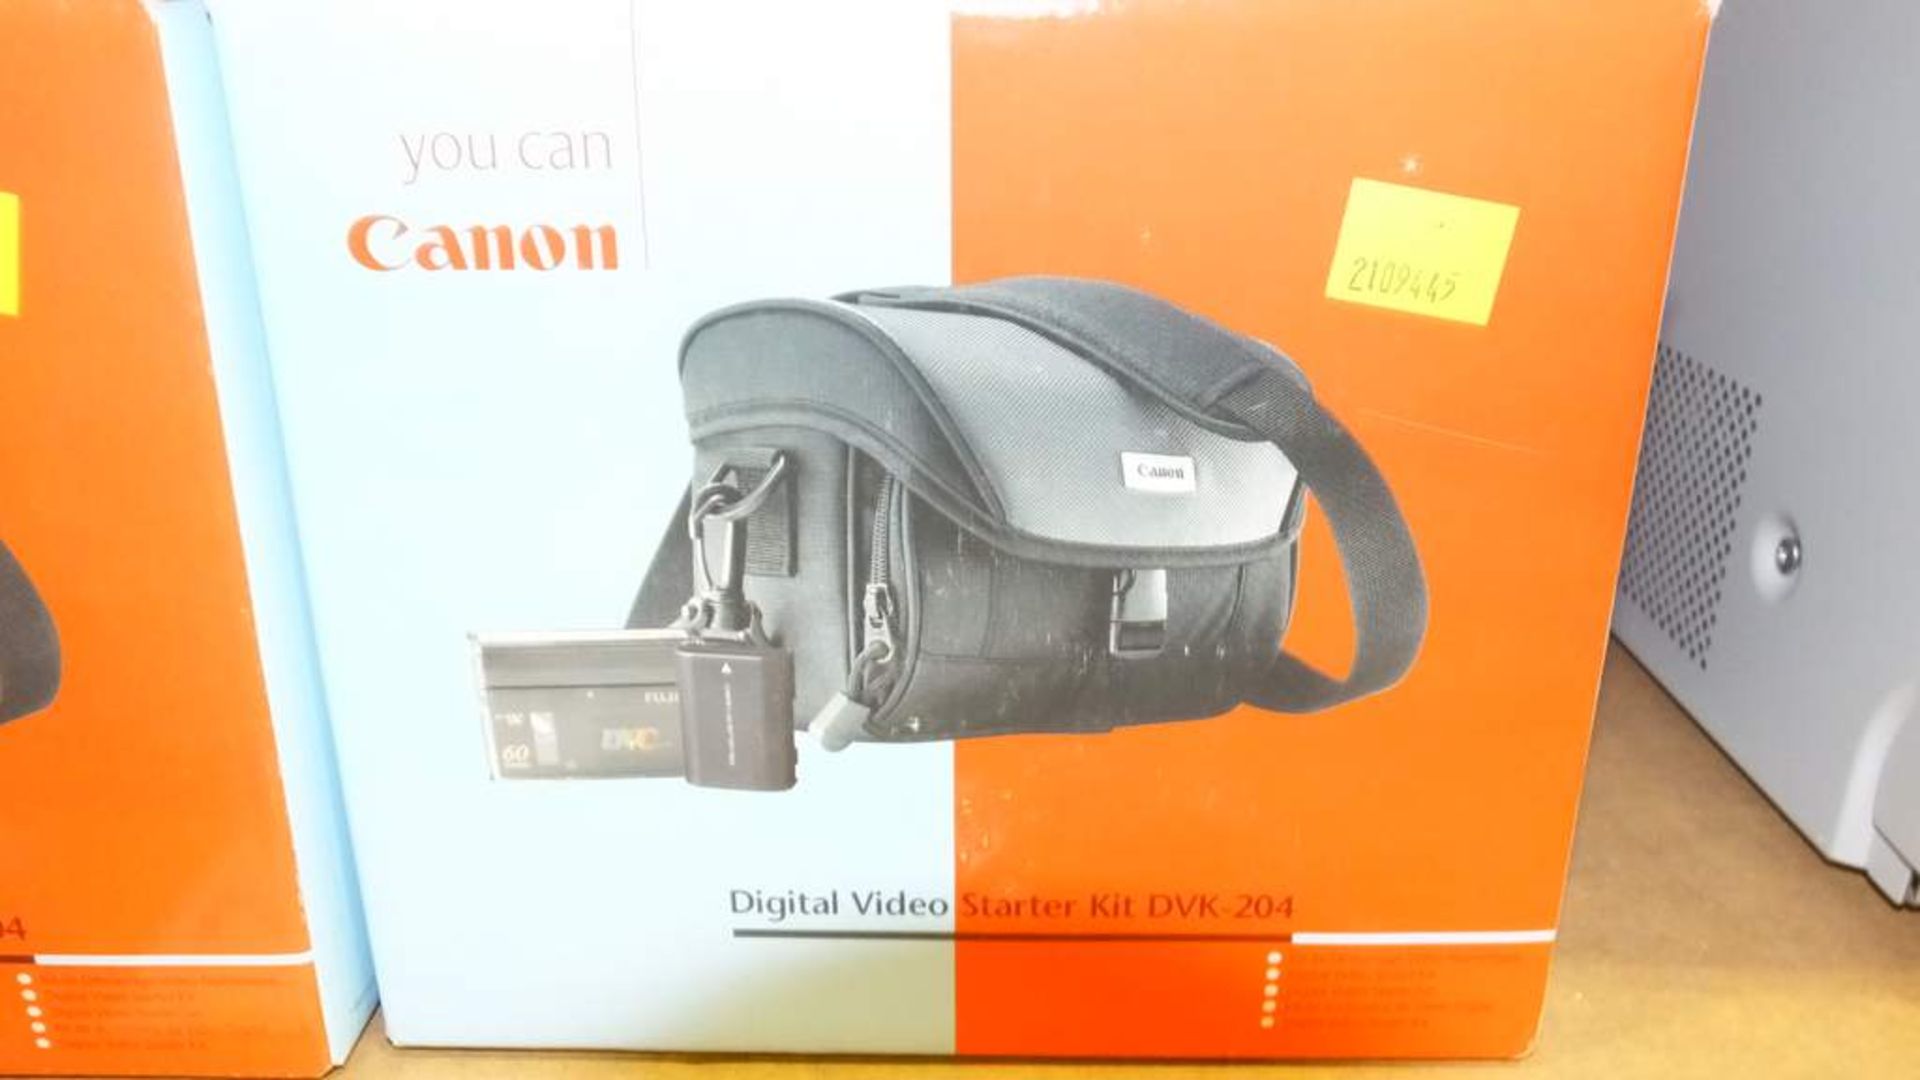 2x Canon digital video starter kit - Image 2 of 3